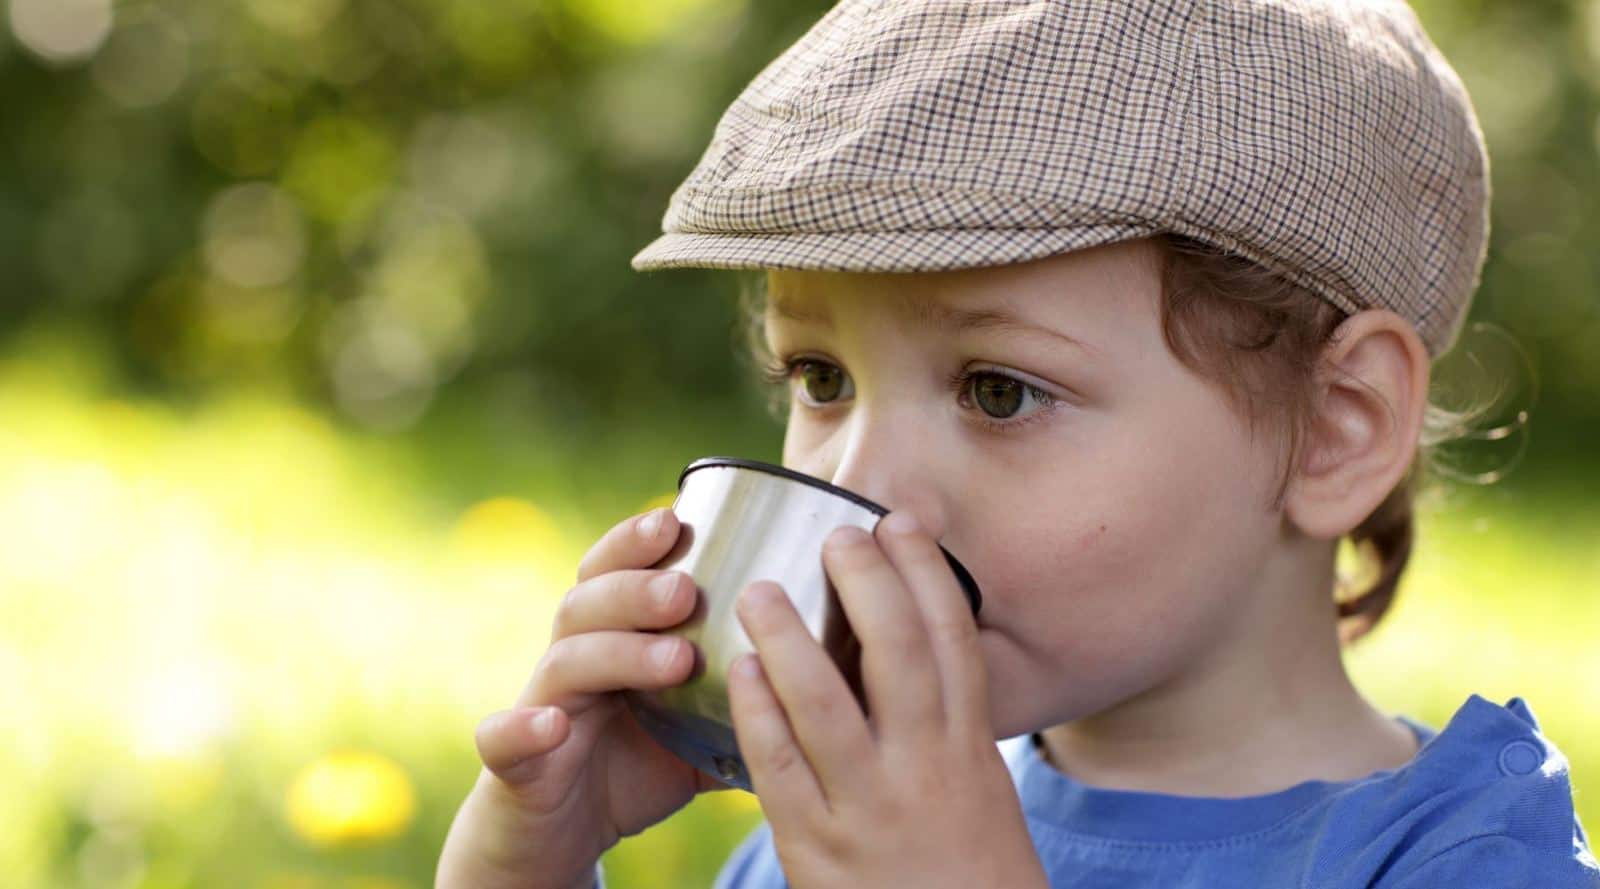 is green tea good for kids?